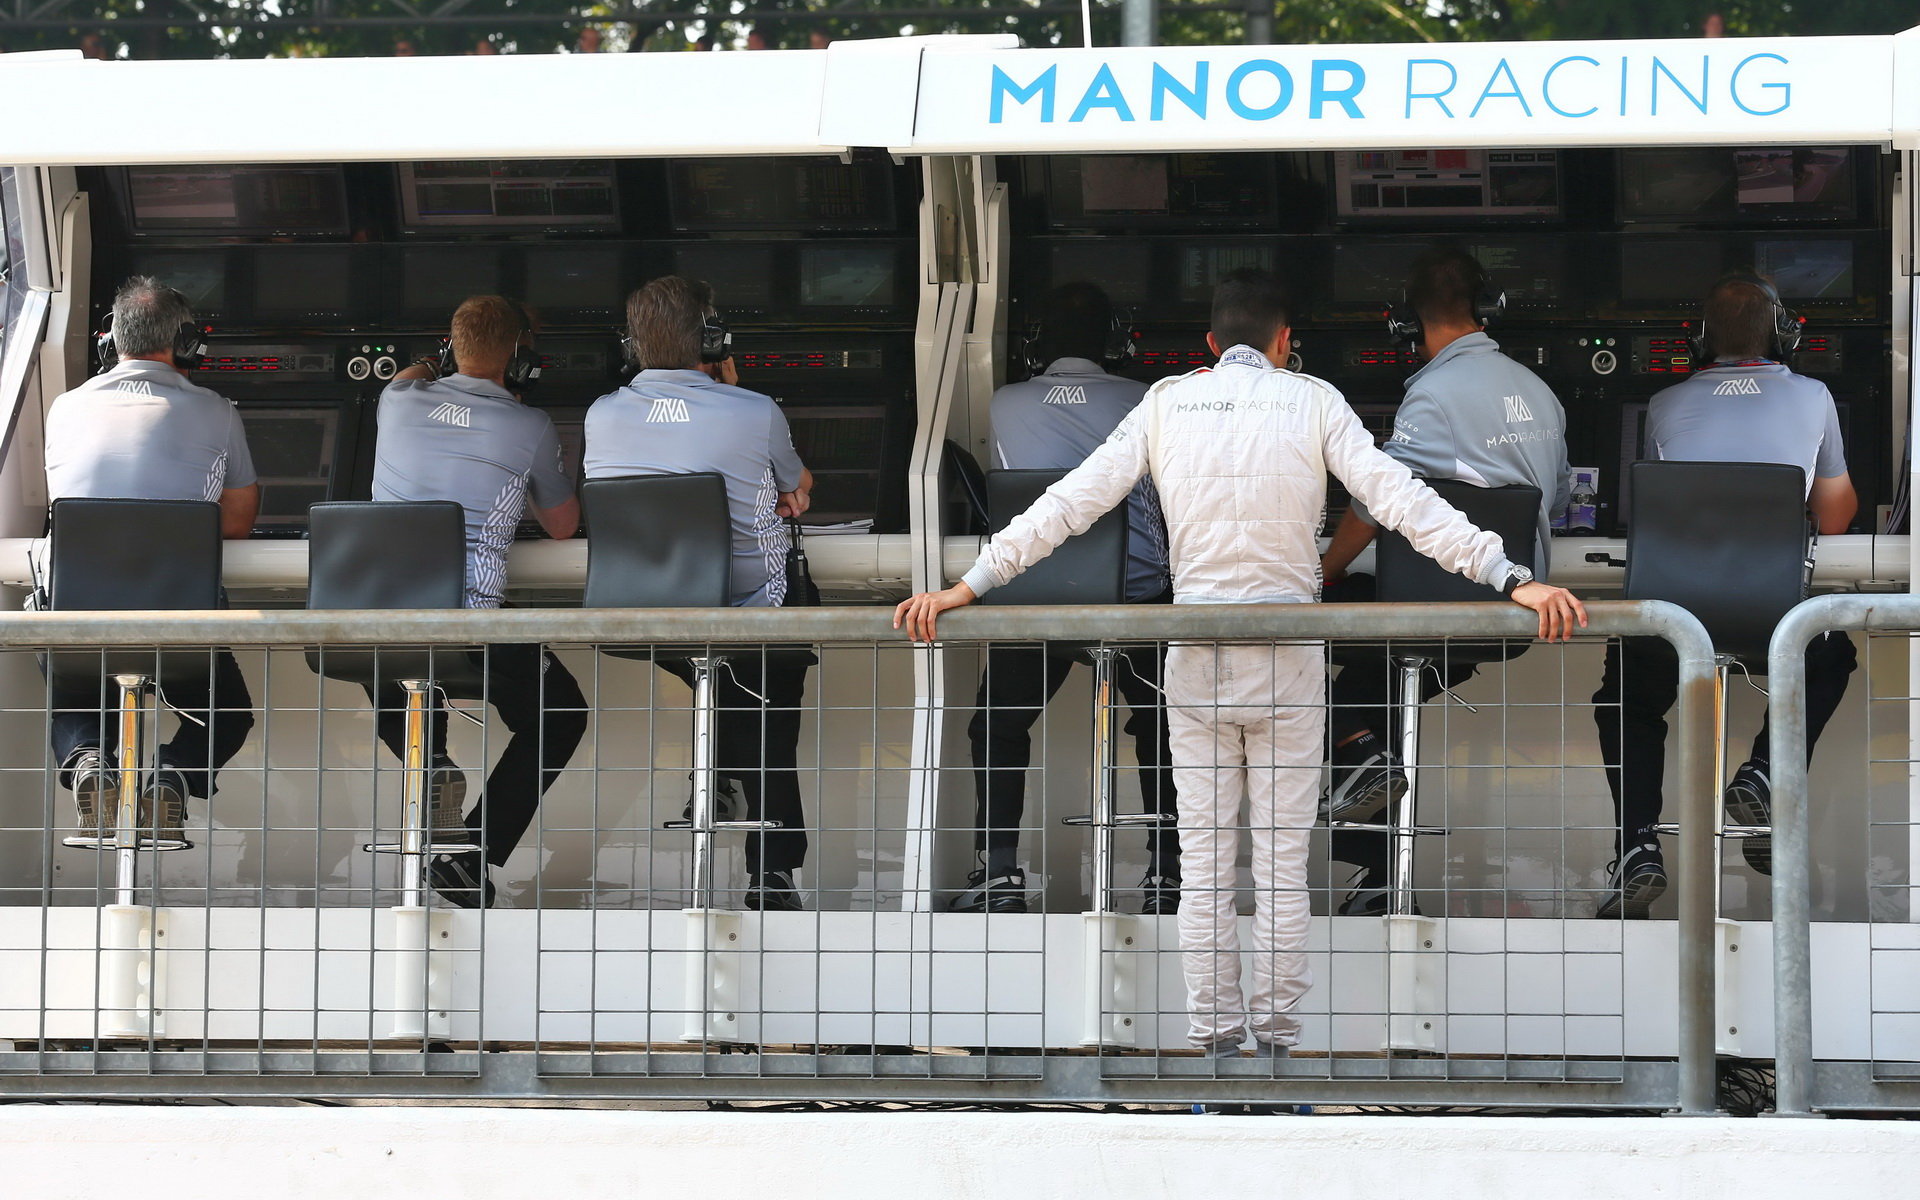 Pitwall týmu Manor v kvalifikaci na Monze